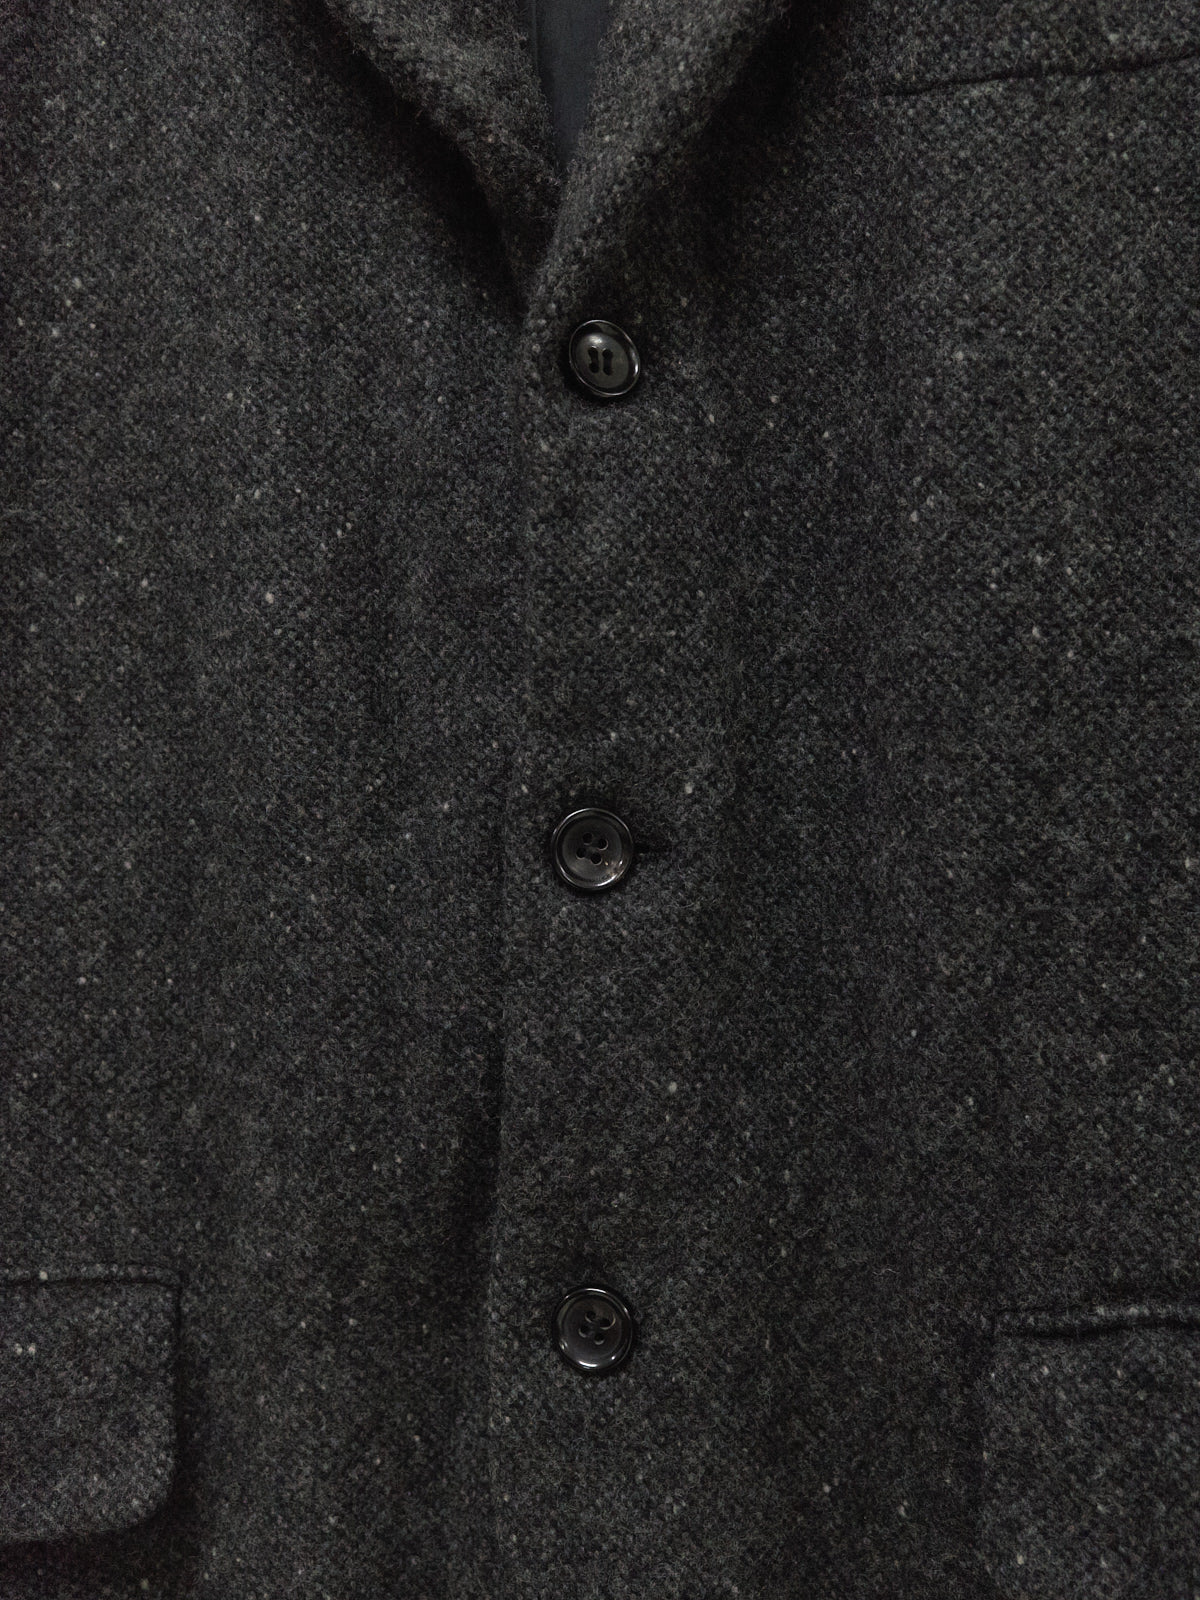 Comme des Garcons Homme 2003 grey boiled wool 3 button blazer - mens S M